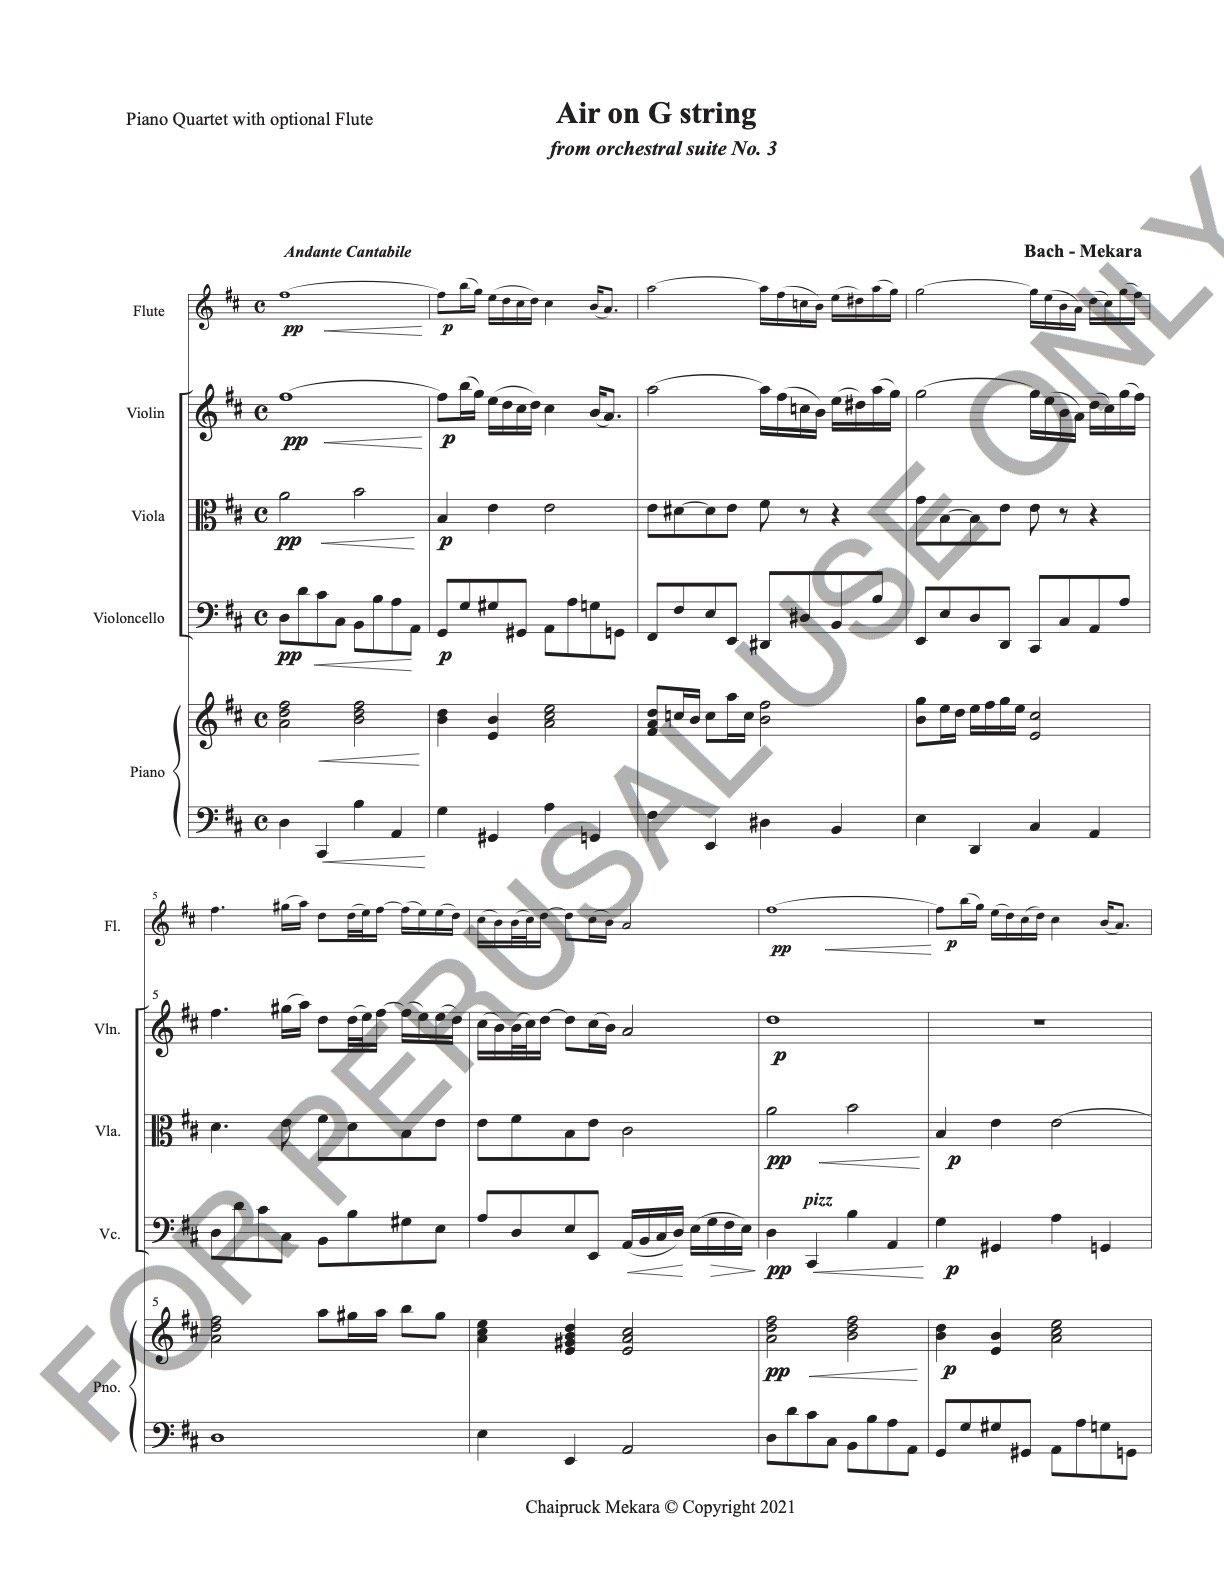 Piano Quartet with optional Flute sheet music: Bach Air on G String - ChaipruckMekara